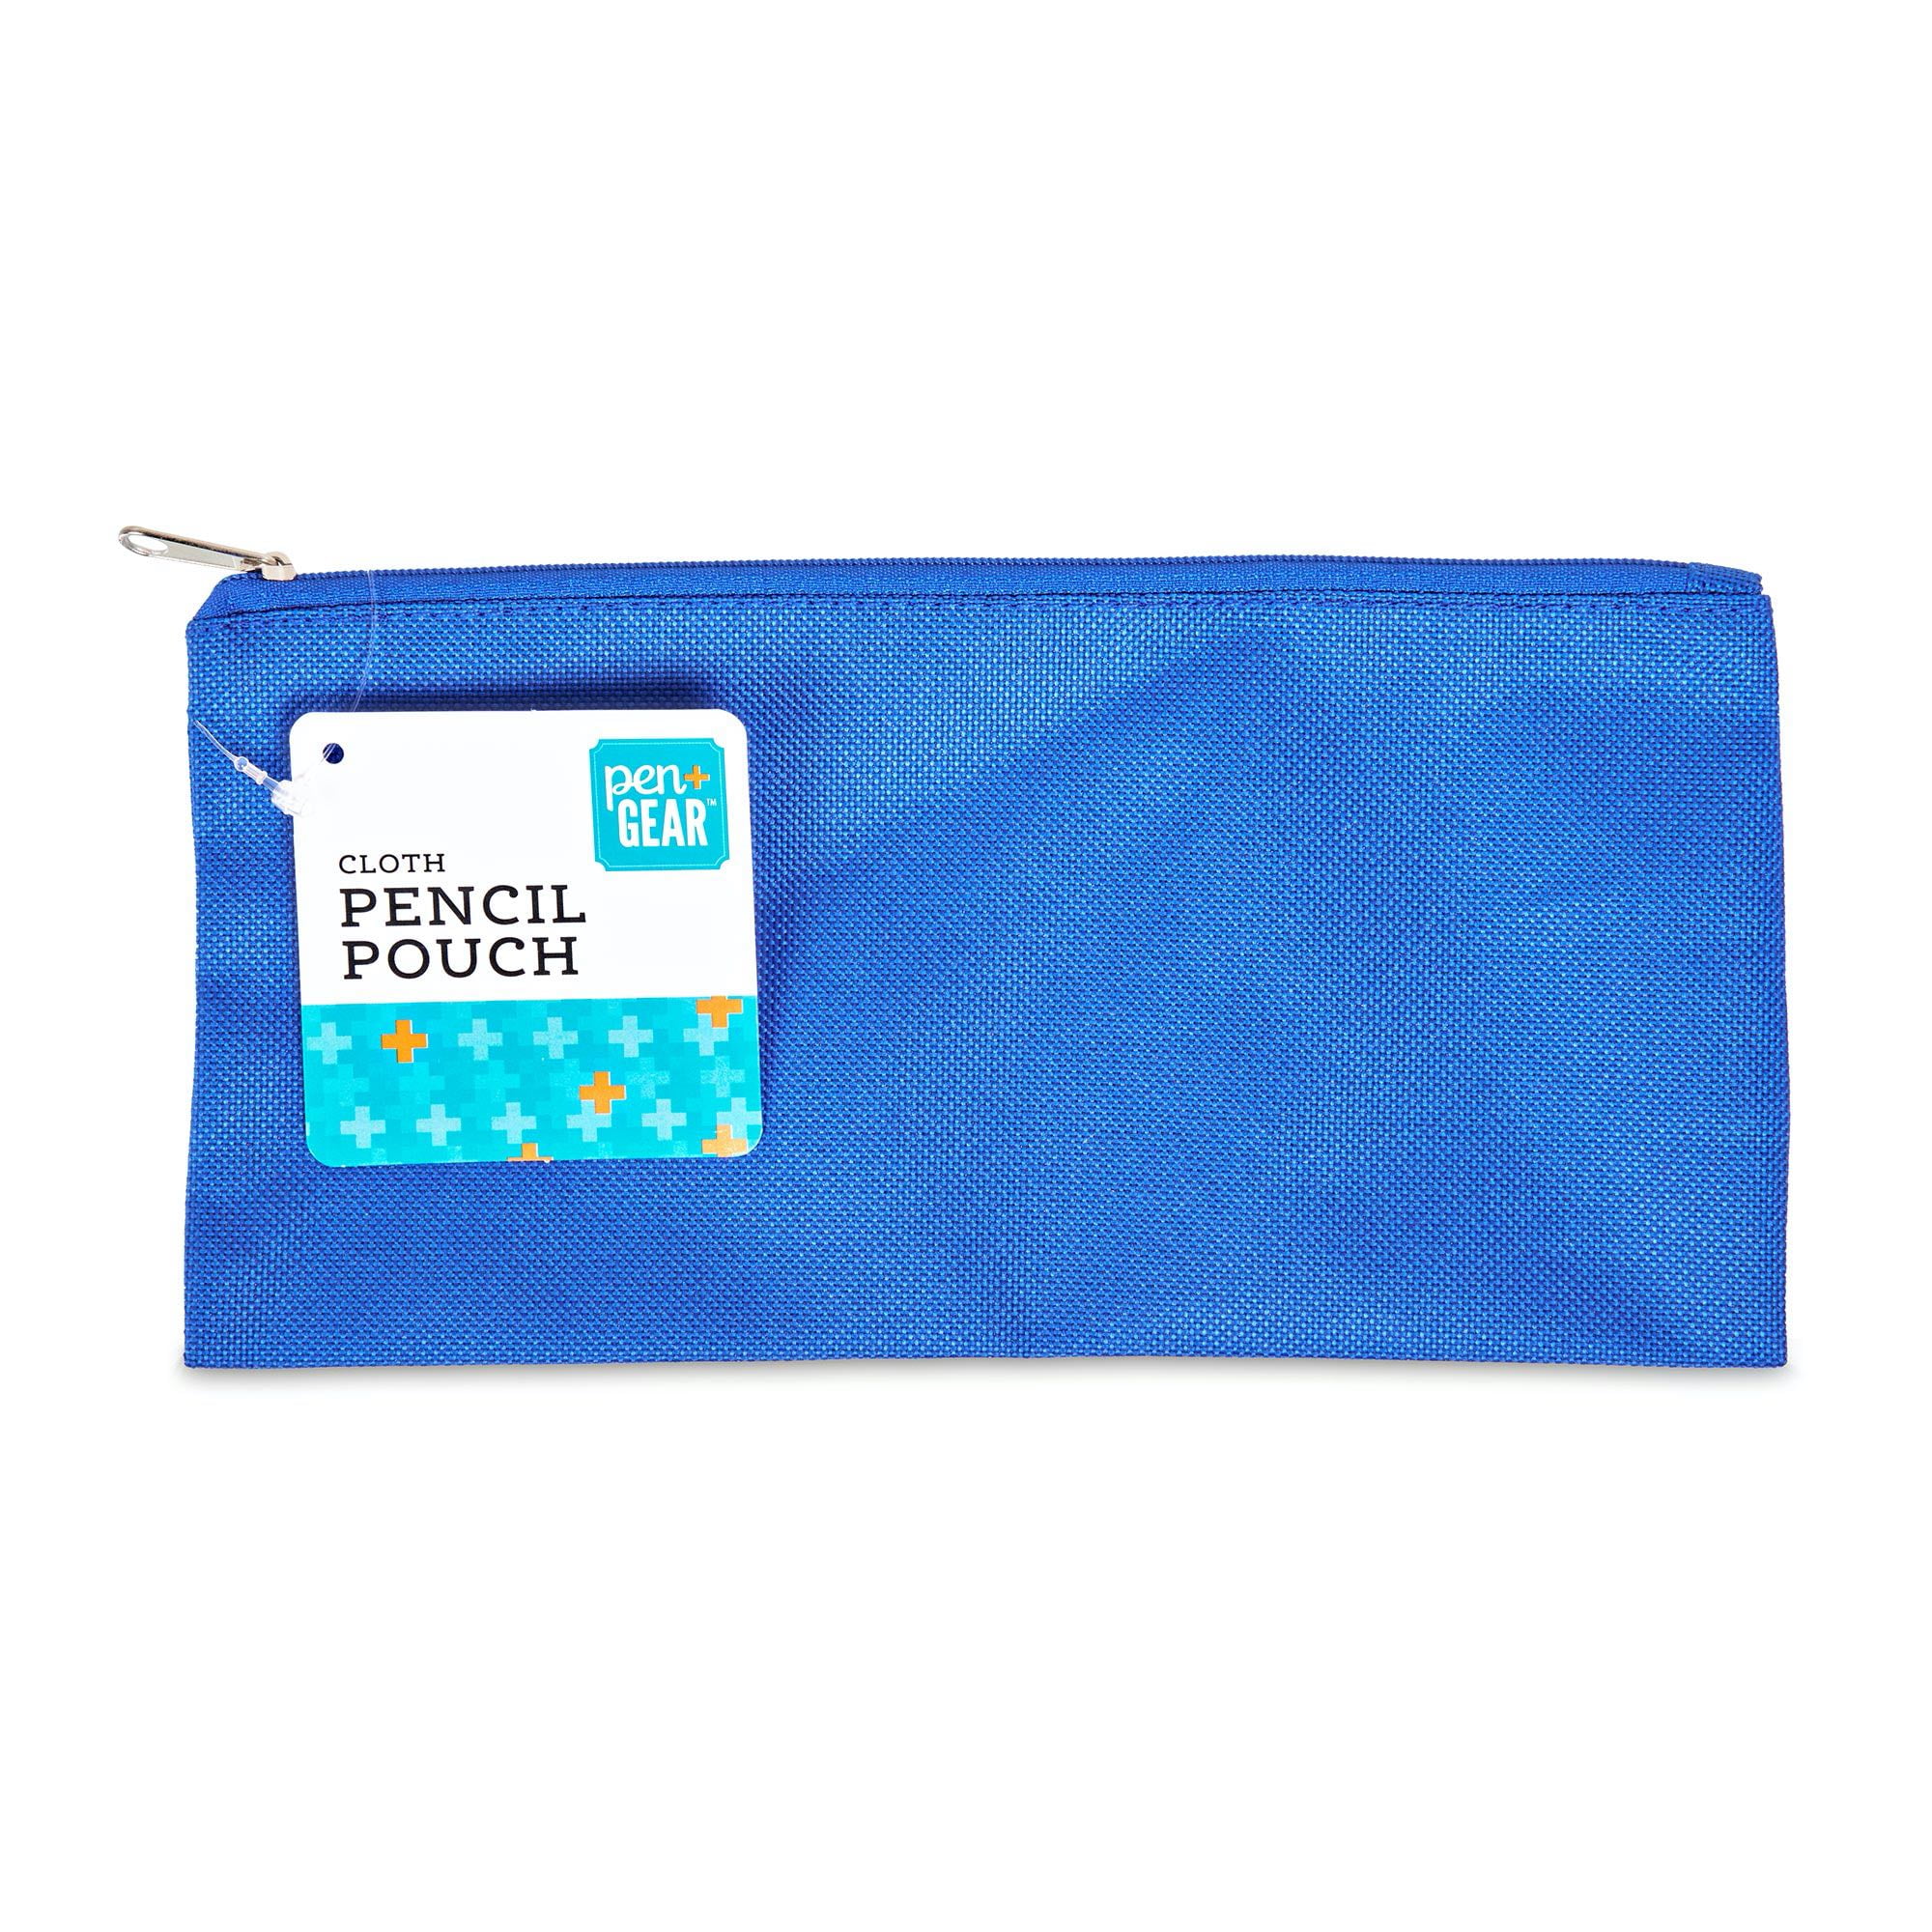 Blue Q Pencil Case Hoo's Next Stationery Pouch Bag QA734 